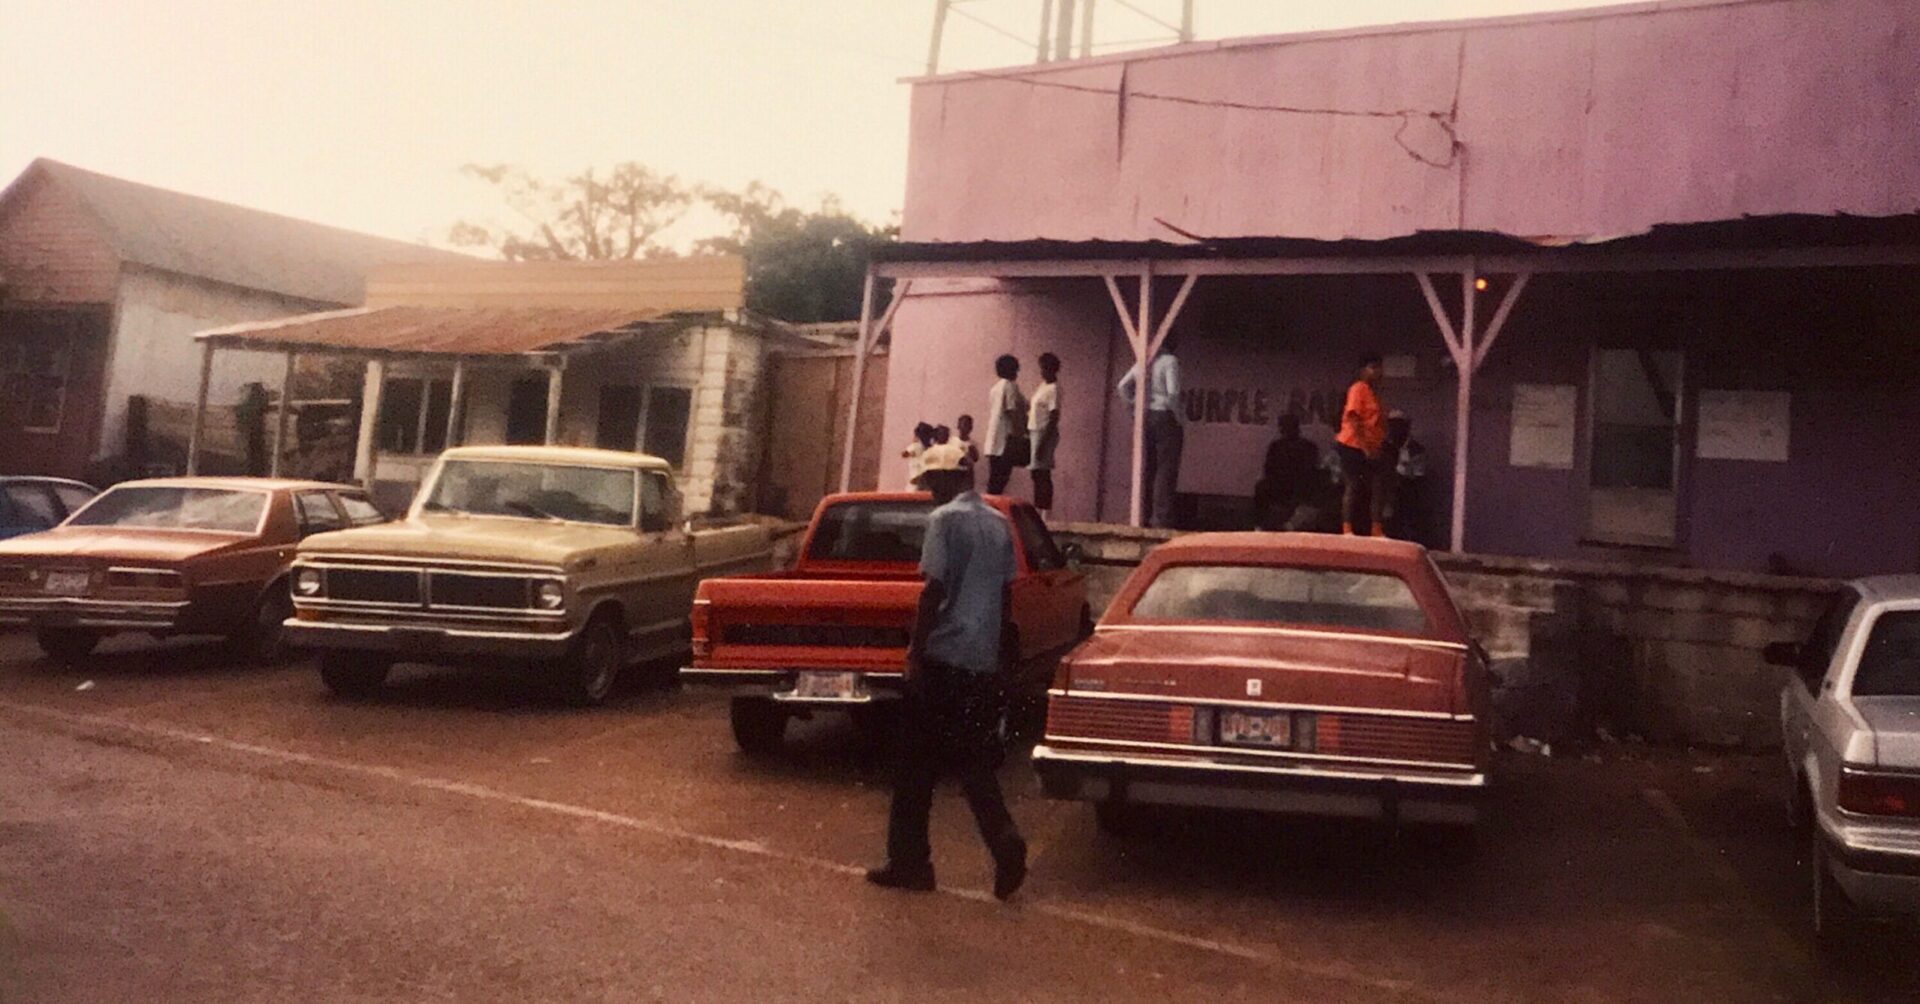 Club Tay-May, Mason TN, Summer 1991